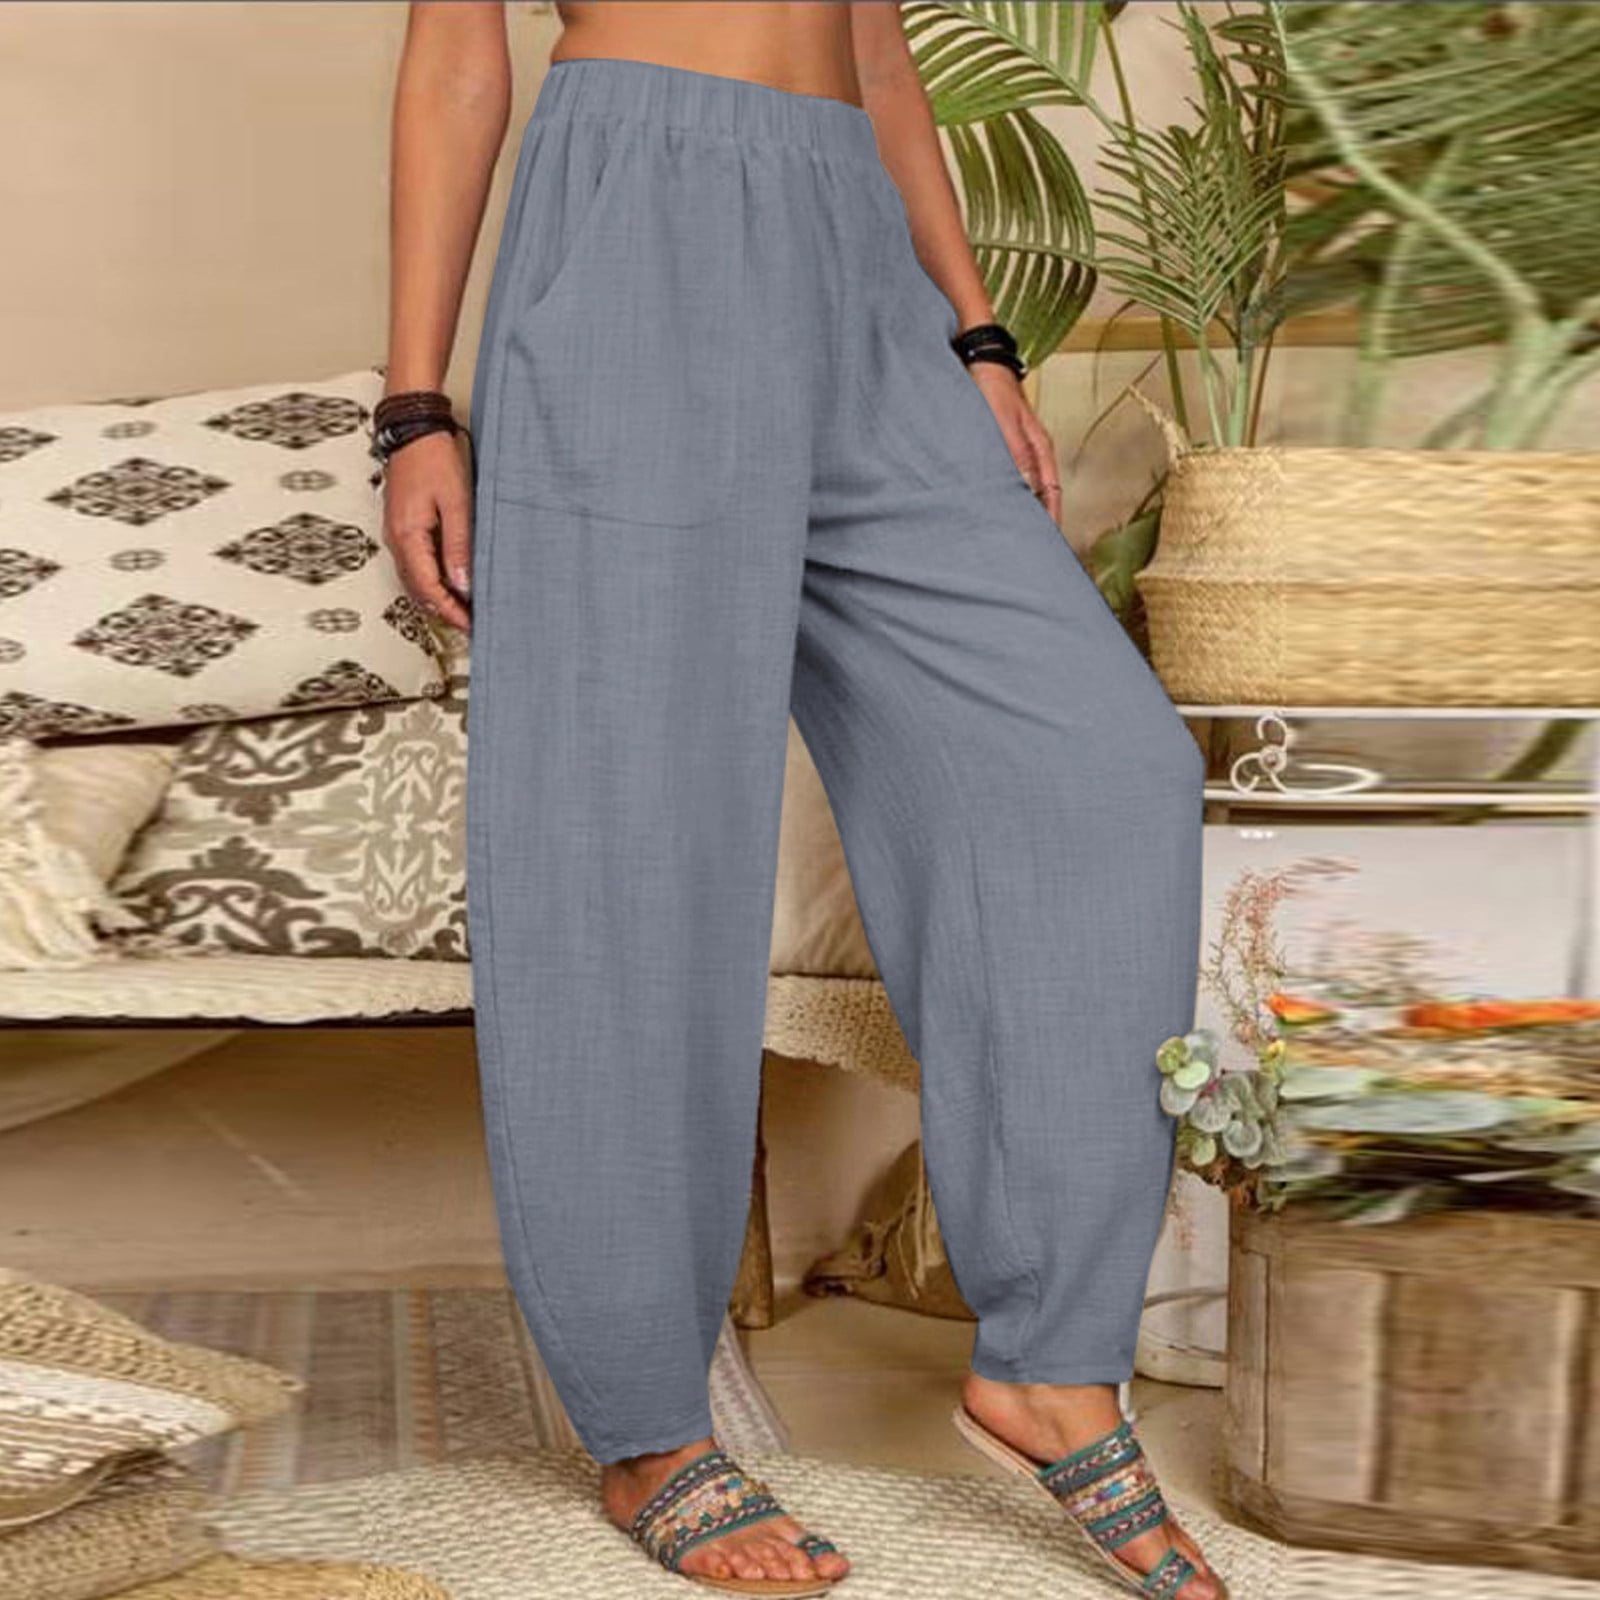 loungewear lightweight and comfortable design. capris Women\u2019s elastic waist casual trousers joggers